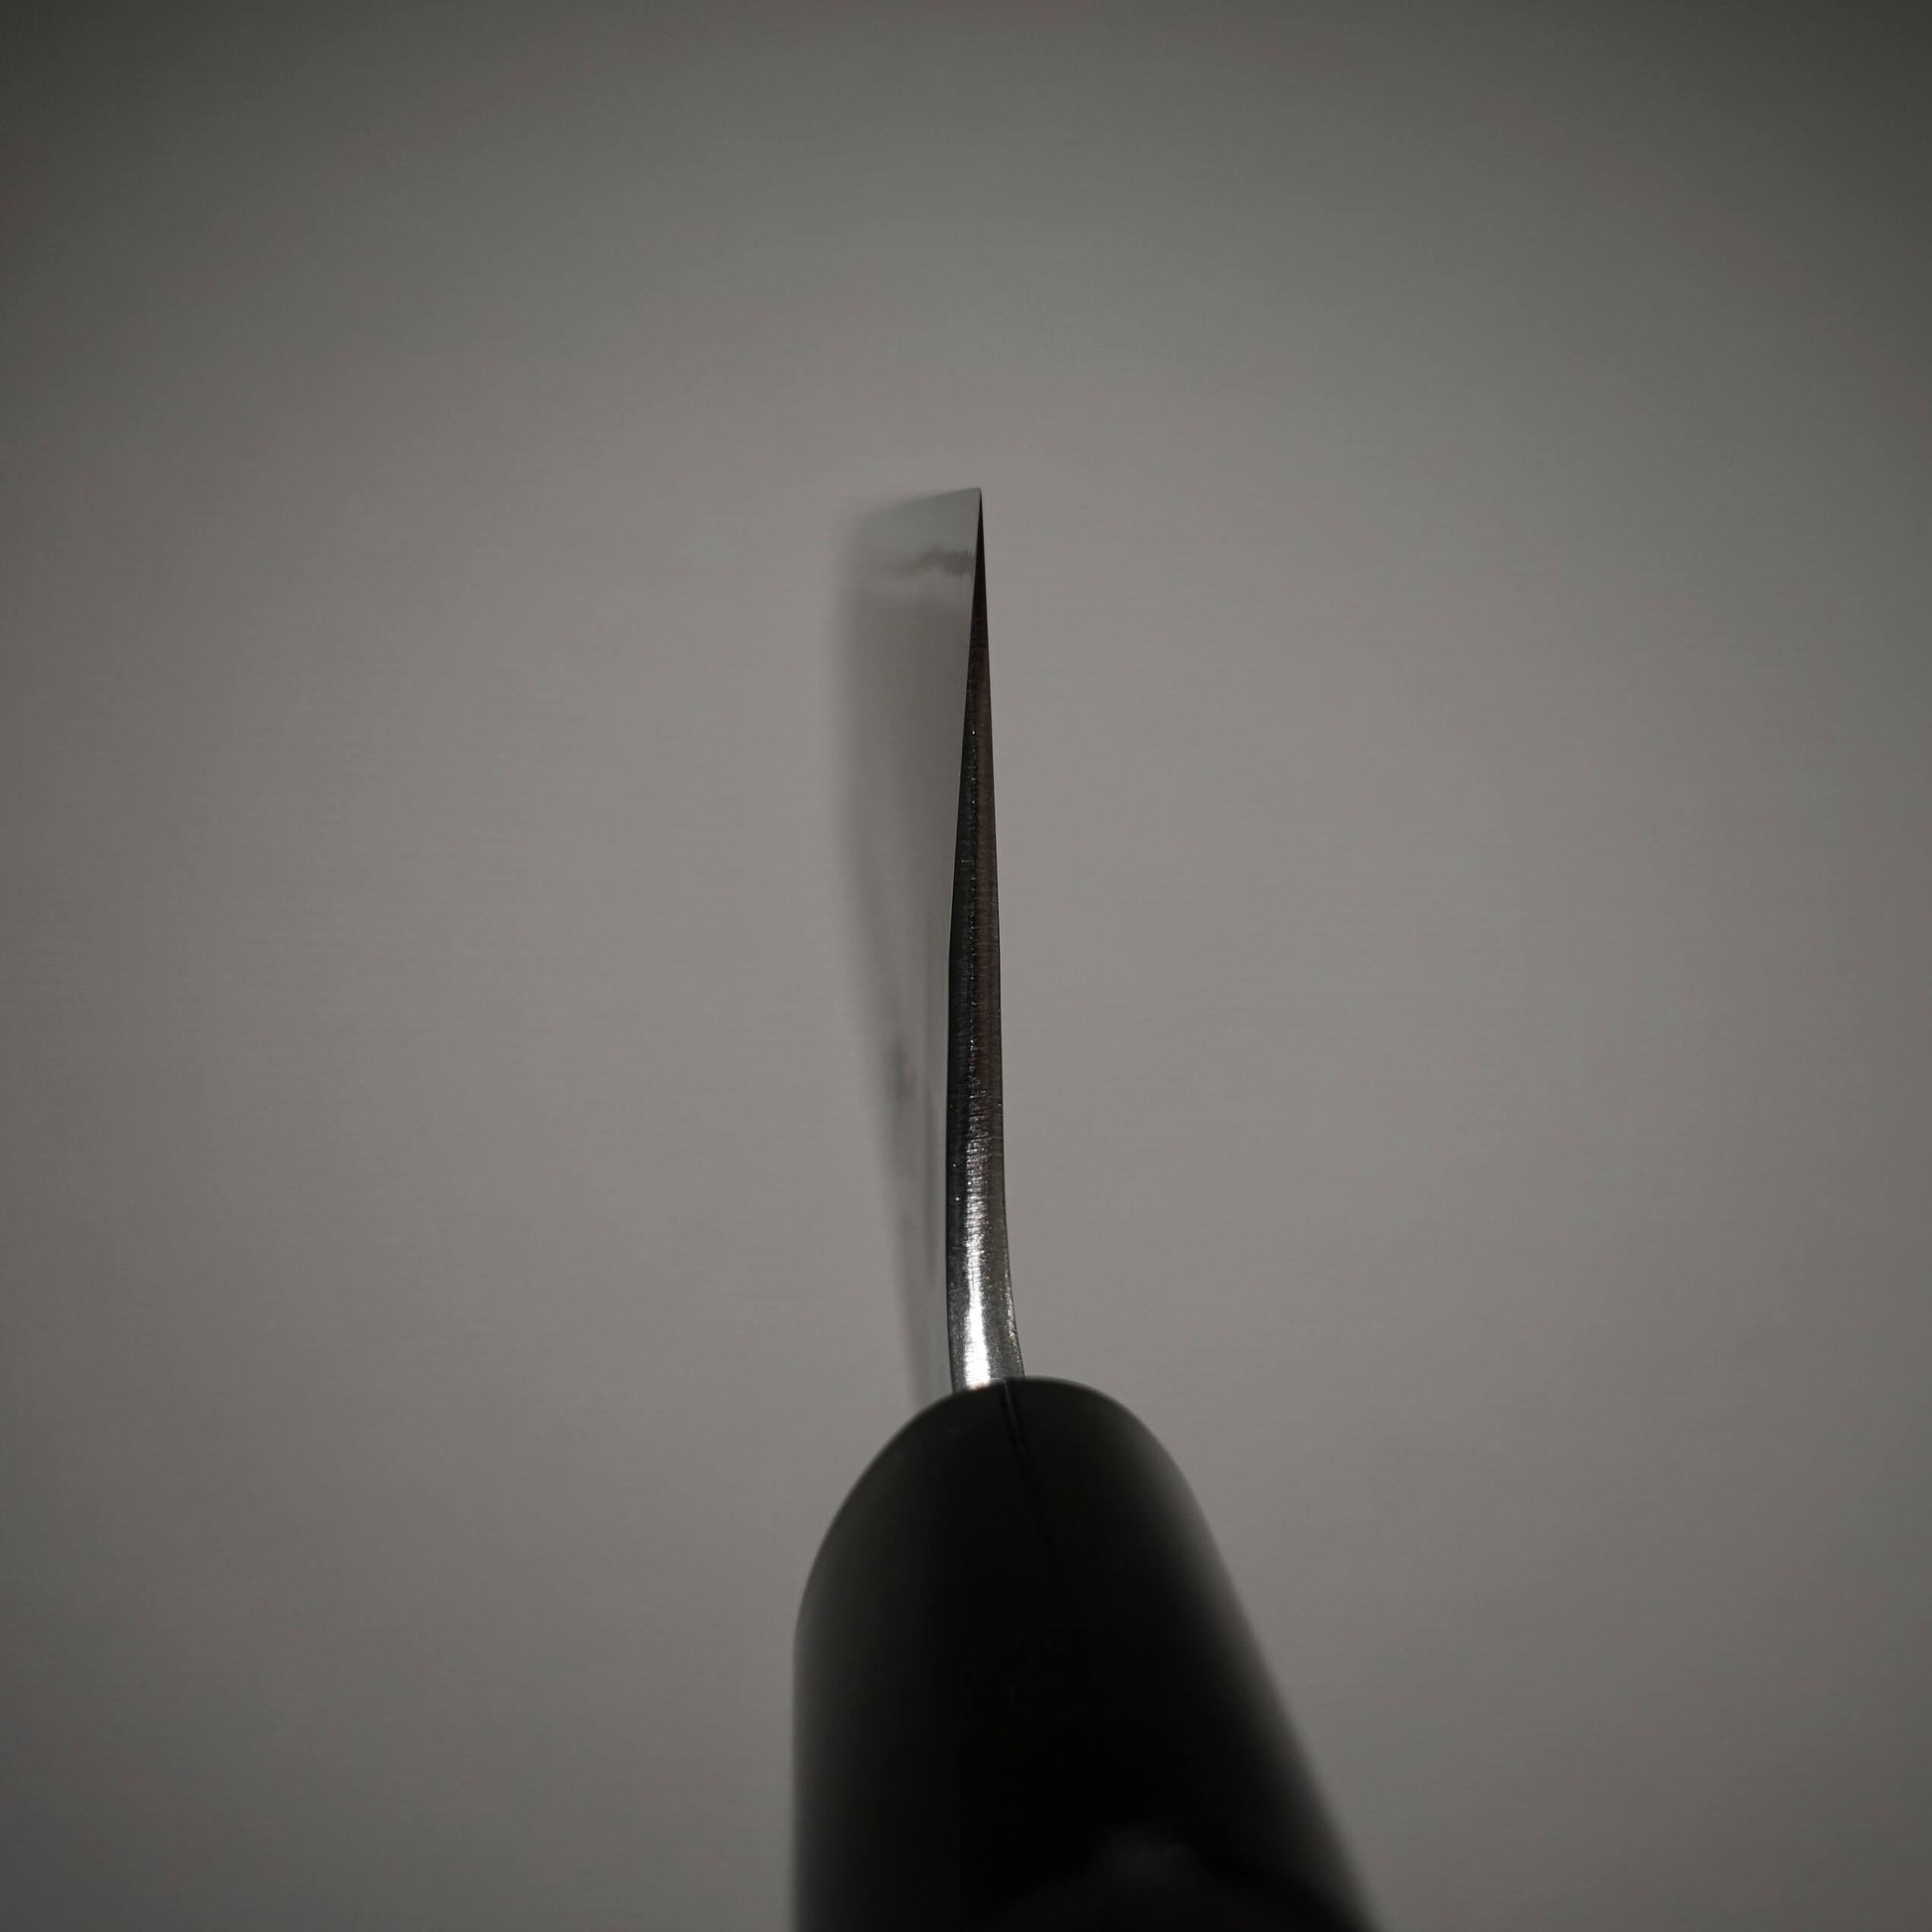 Yoshikane tsuchime SKD 165mm nakiri (custom handle) - Zahocho Japanese Knives